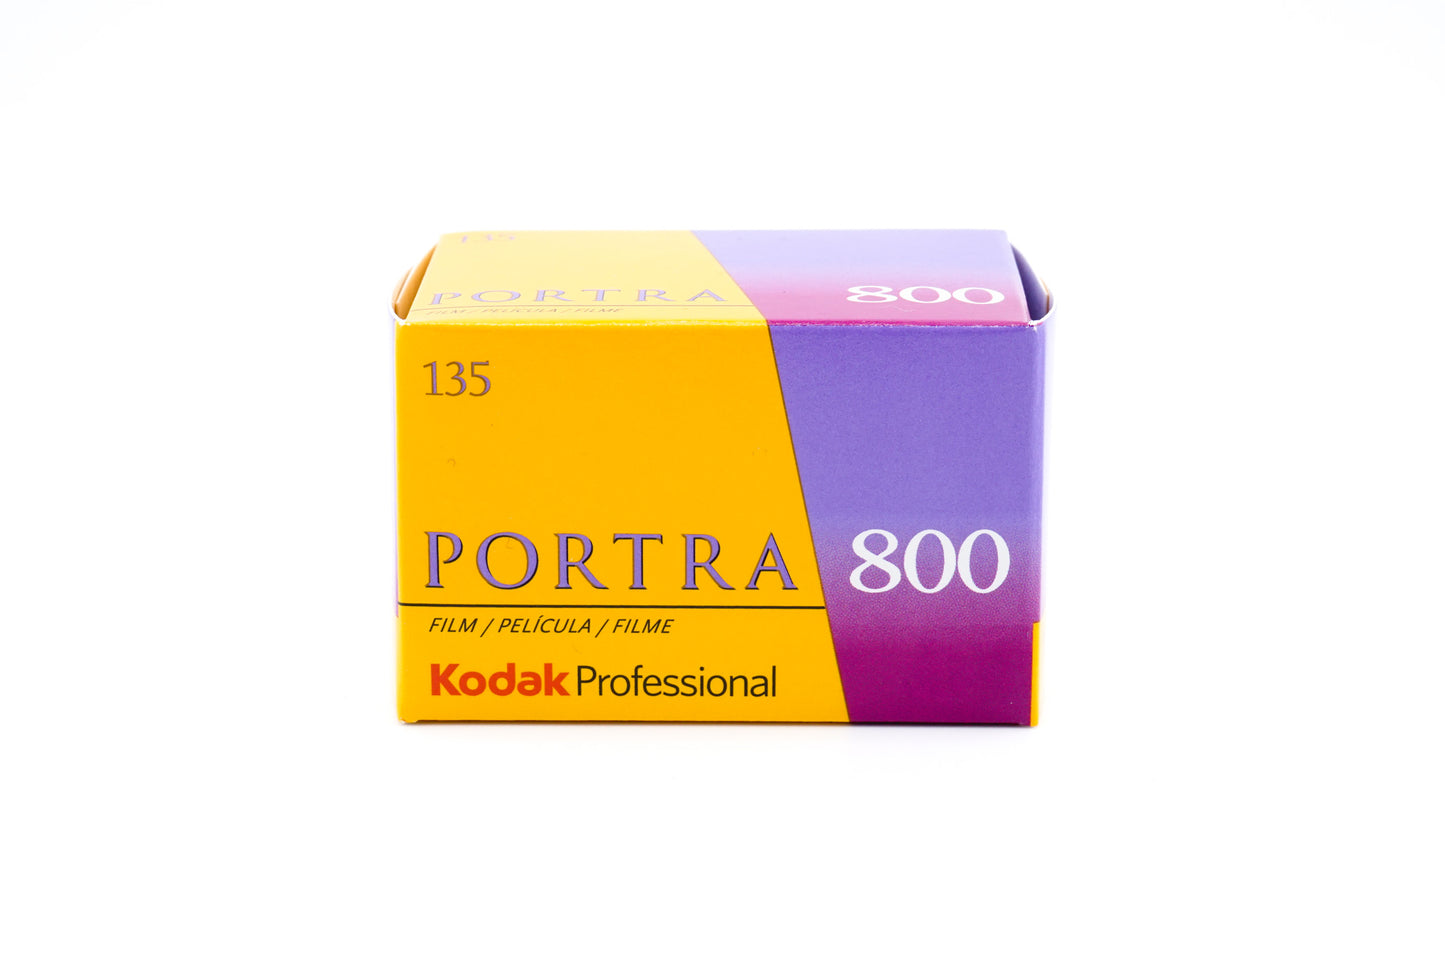 Boxed Kodak Portra 800 film on a white background. 